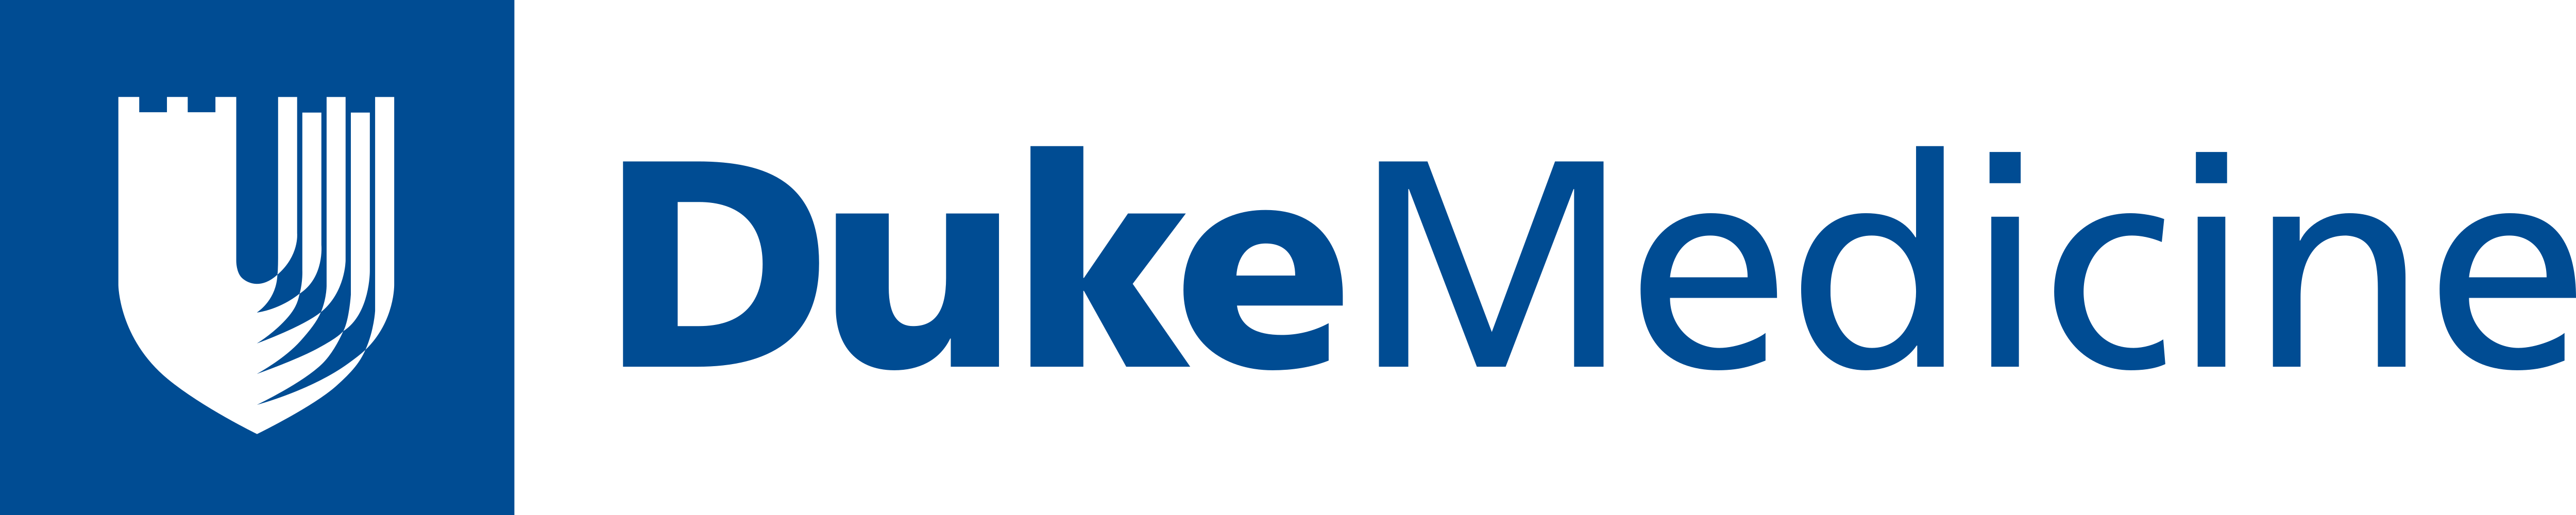 Duke Medicine Logos Download